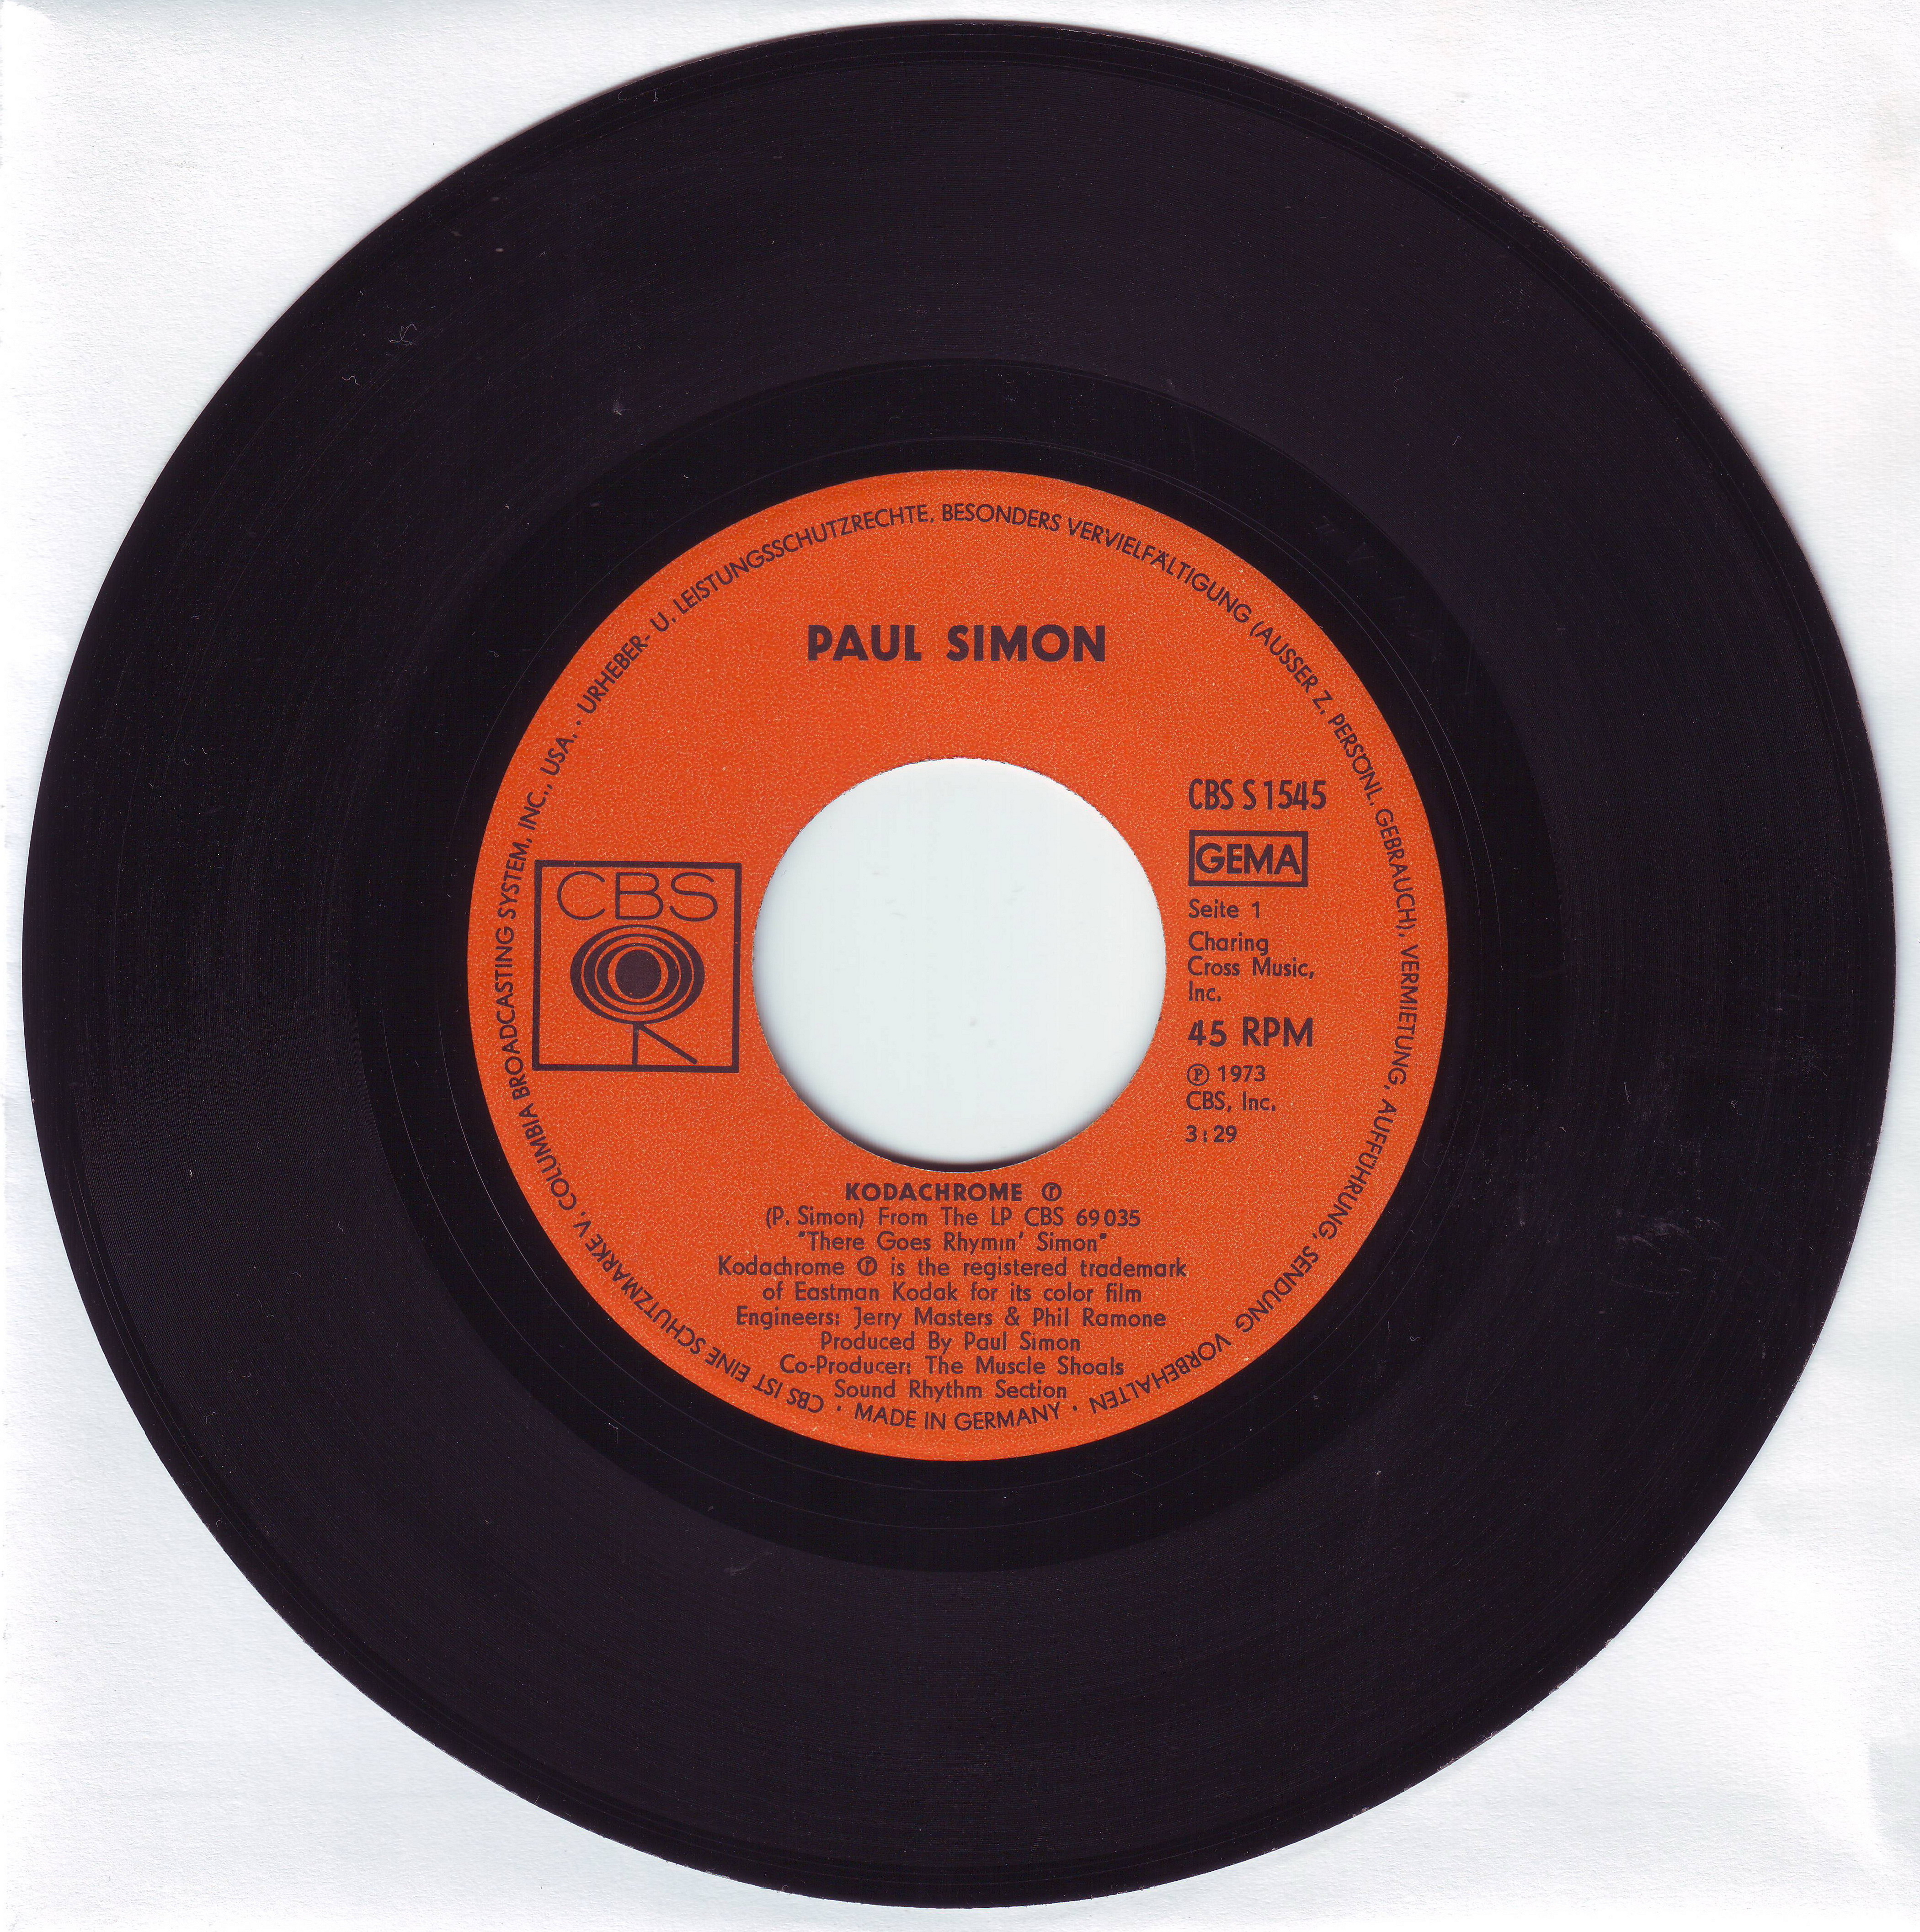 Kodachrome - Paul Simon; Vinyl record